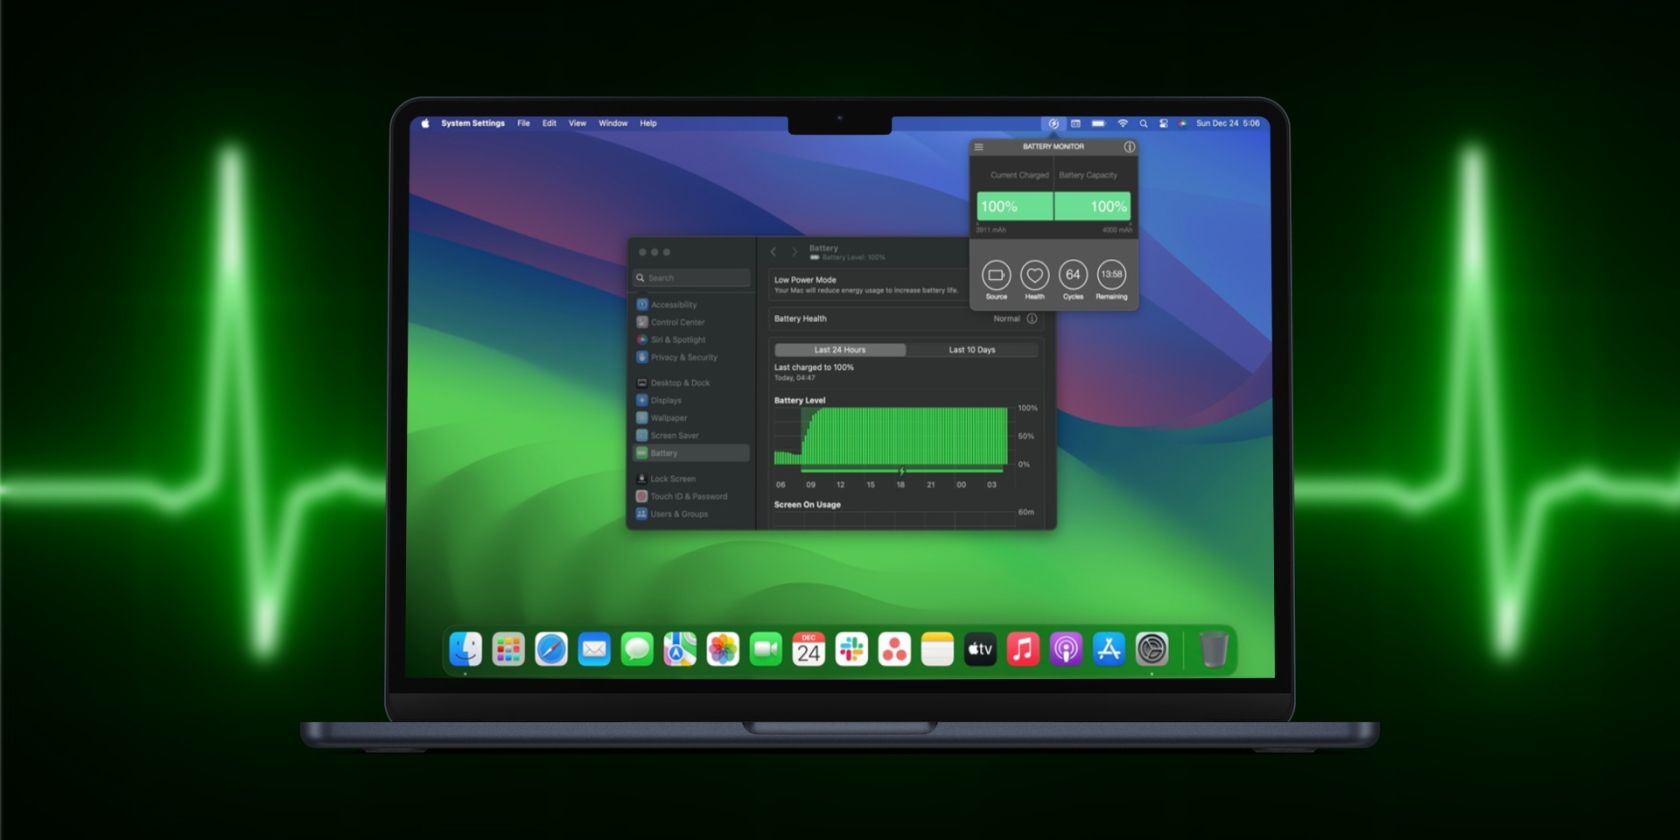 MacBook showing battery status in System Settings and menu bar